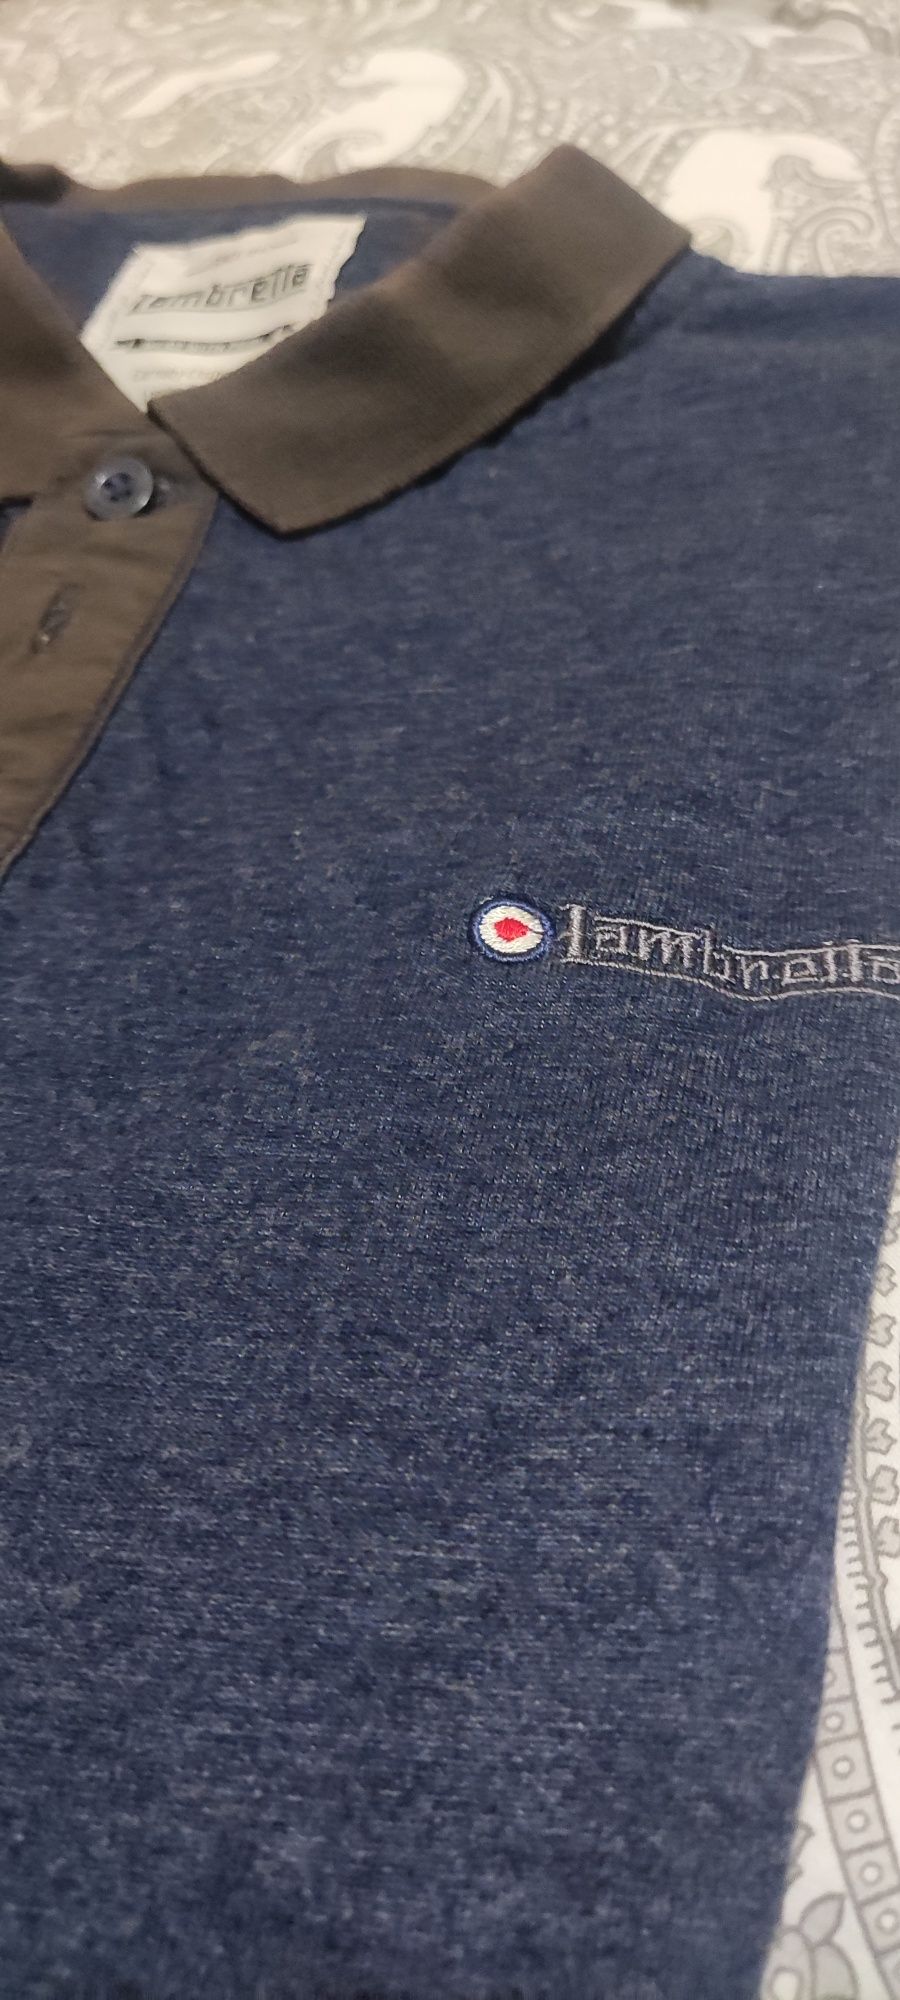 Polo de manga curta, original da marca Lambretta, tamanho L